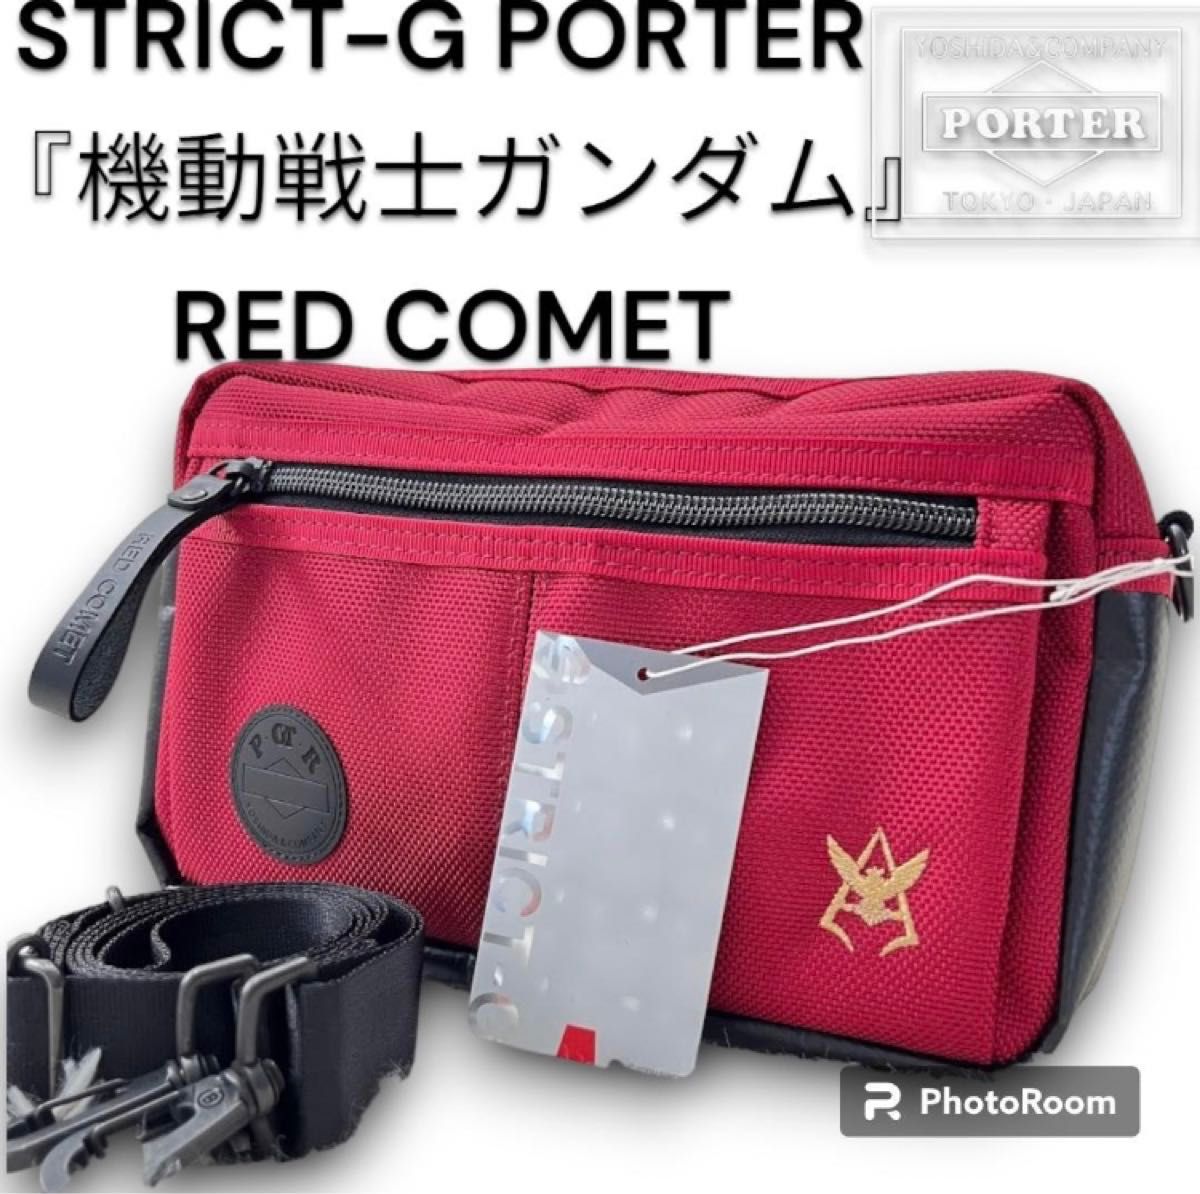 STRICT-G PORTER ポーター 機動戦士ガンダム バッグ RED COMET レッド